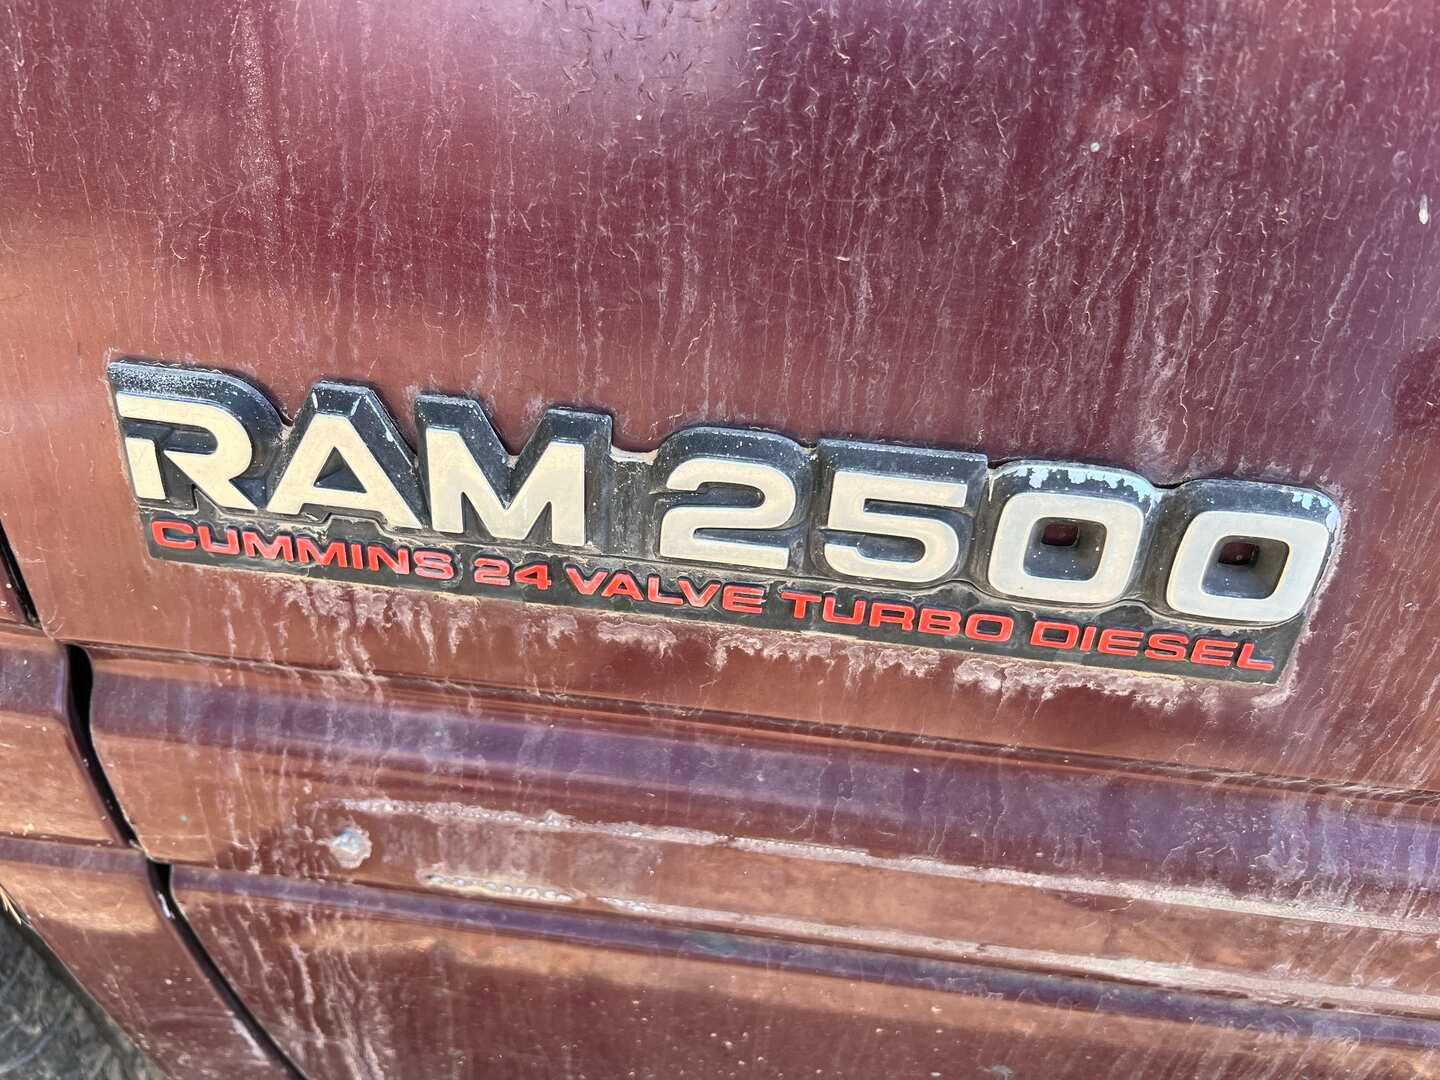 2001 DODGE RAM 2500 EXTENDED CAB PICKUP Cummins 24 valve turbo diesel engin